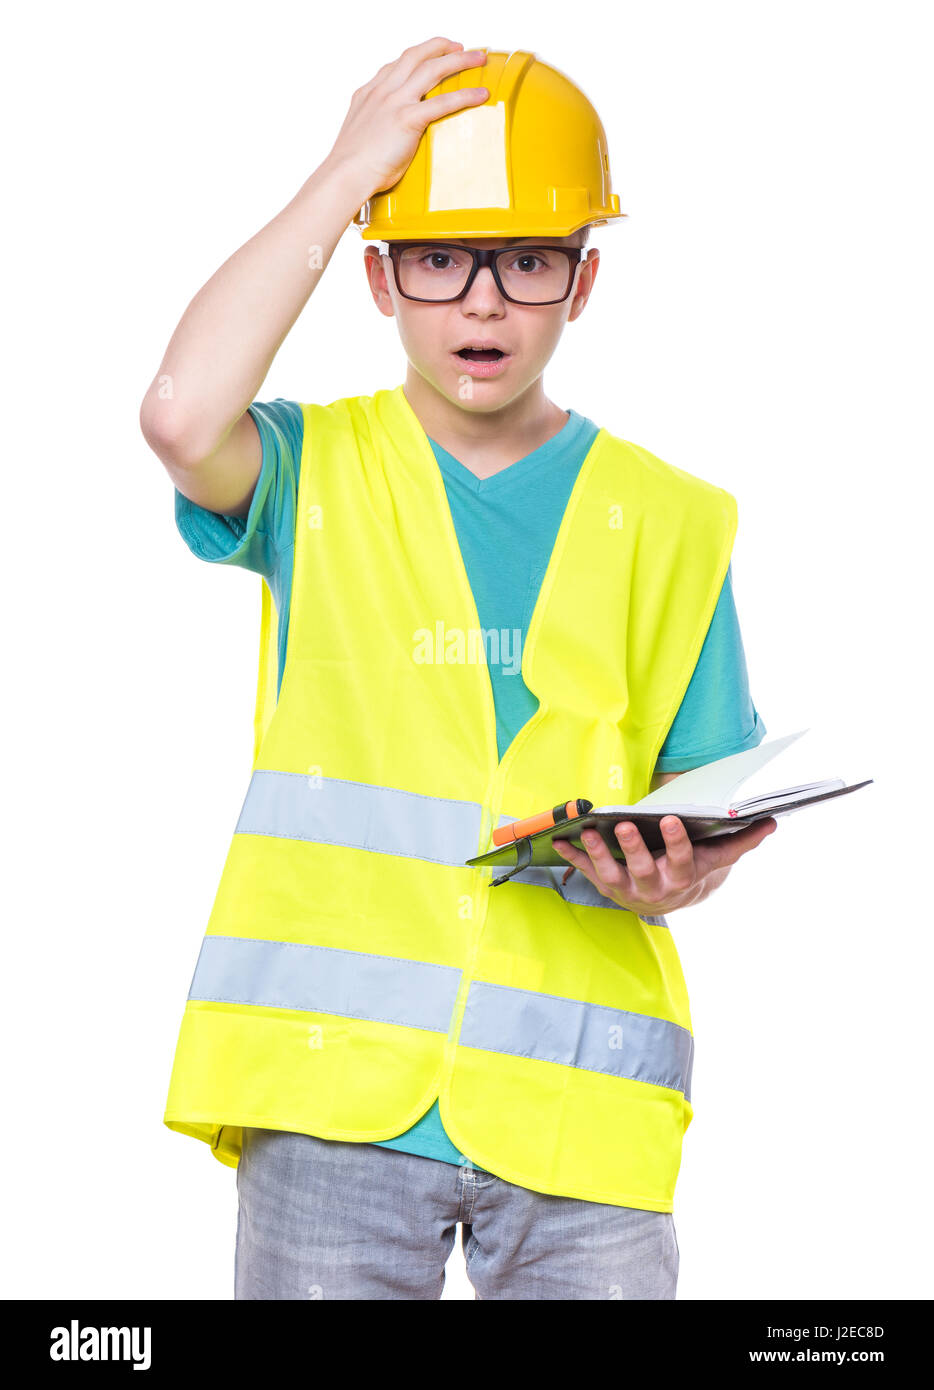 Boy wearing yellow hard hat Stock Photo